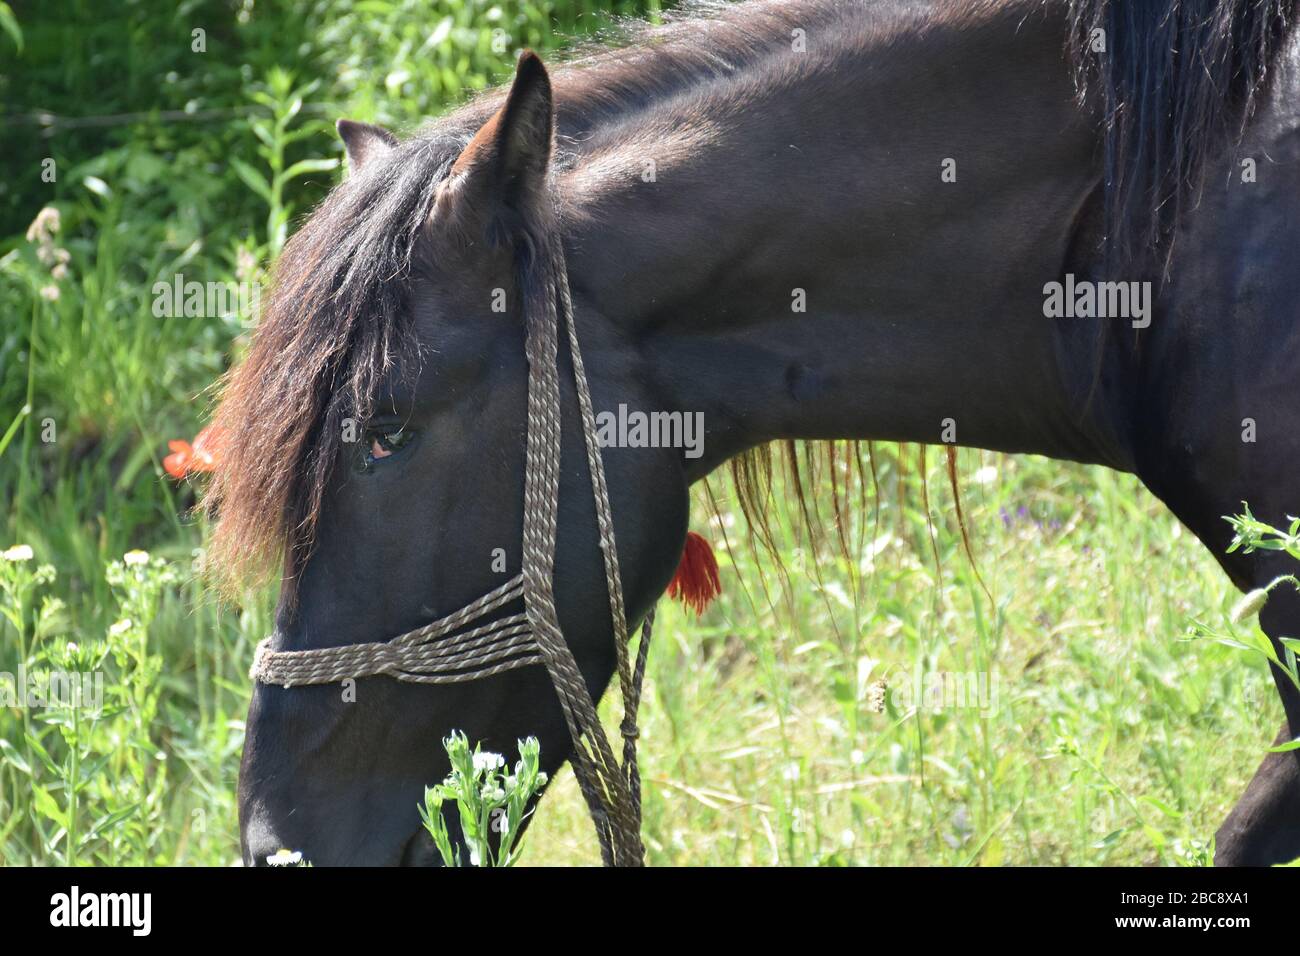 Head of horse sideways. Black horse with black-brown mane Stock Photo